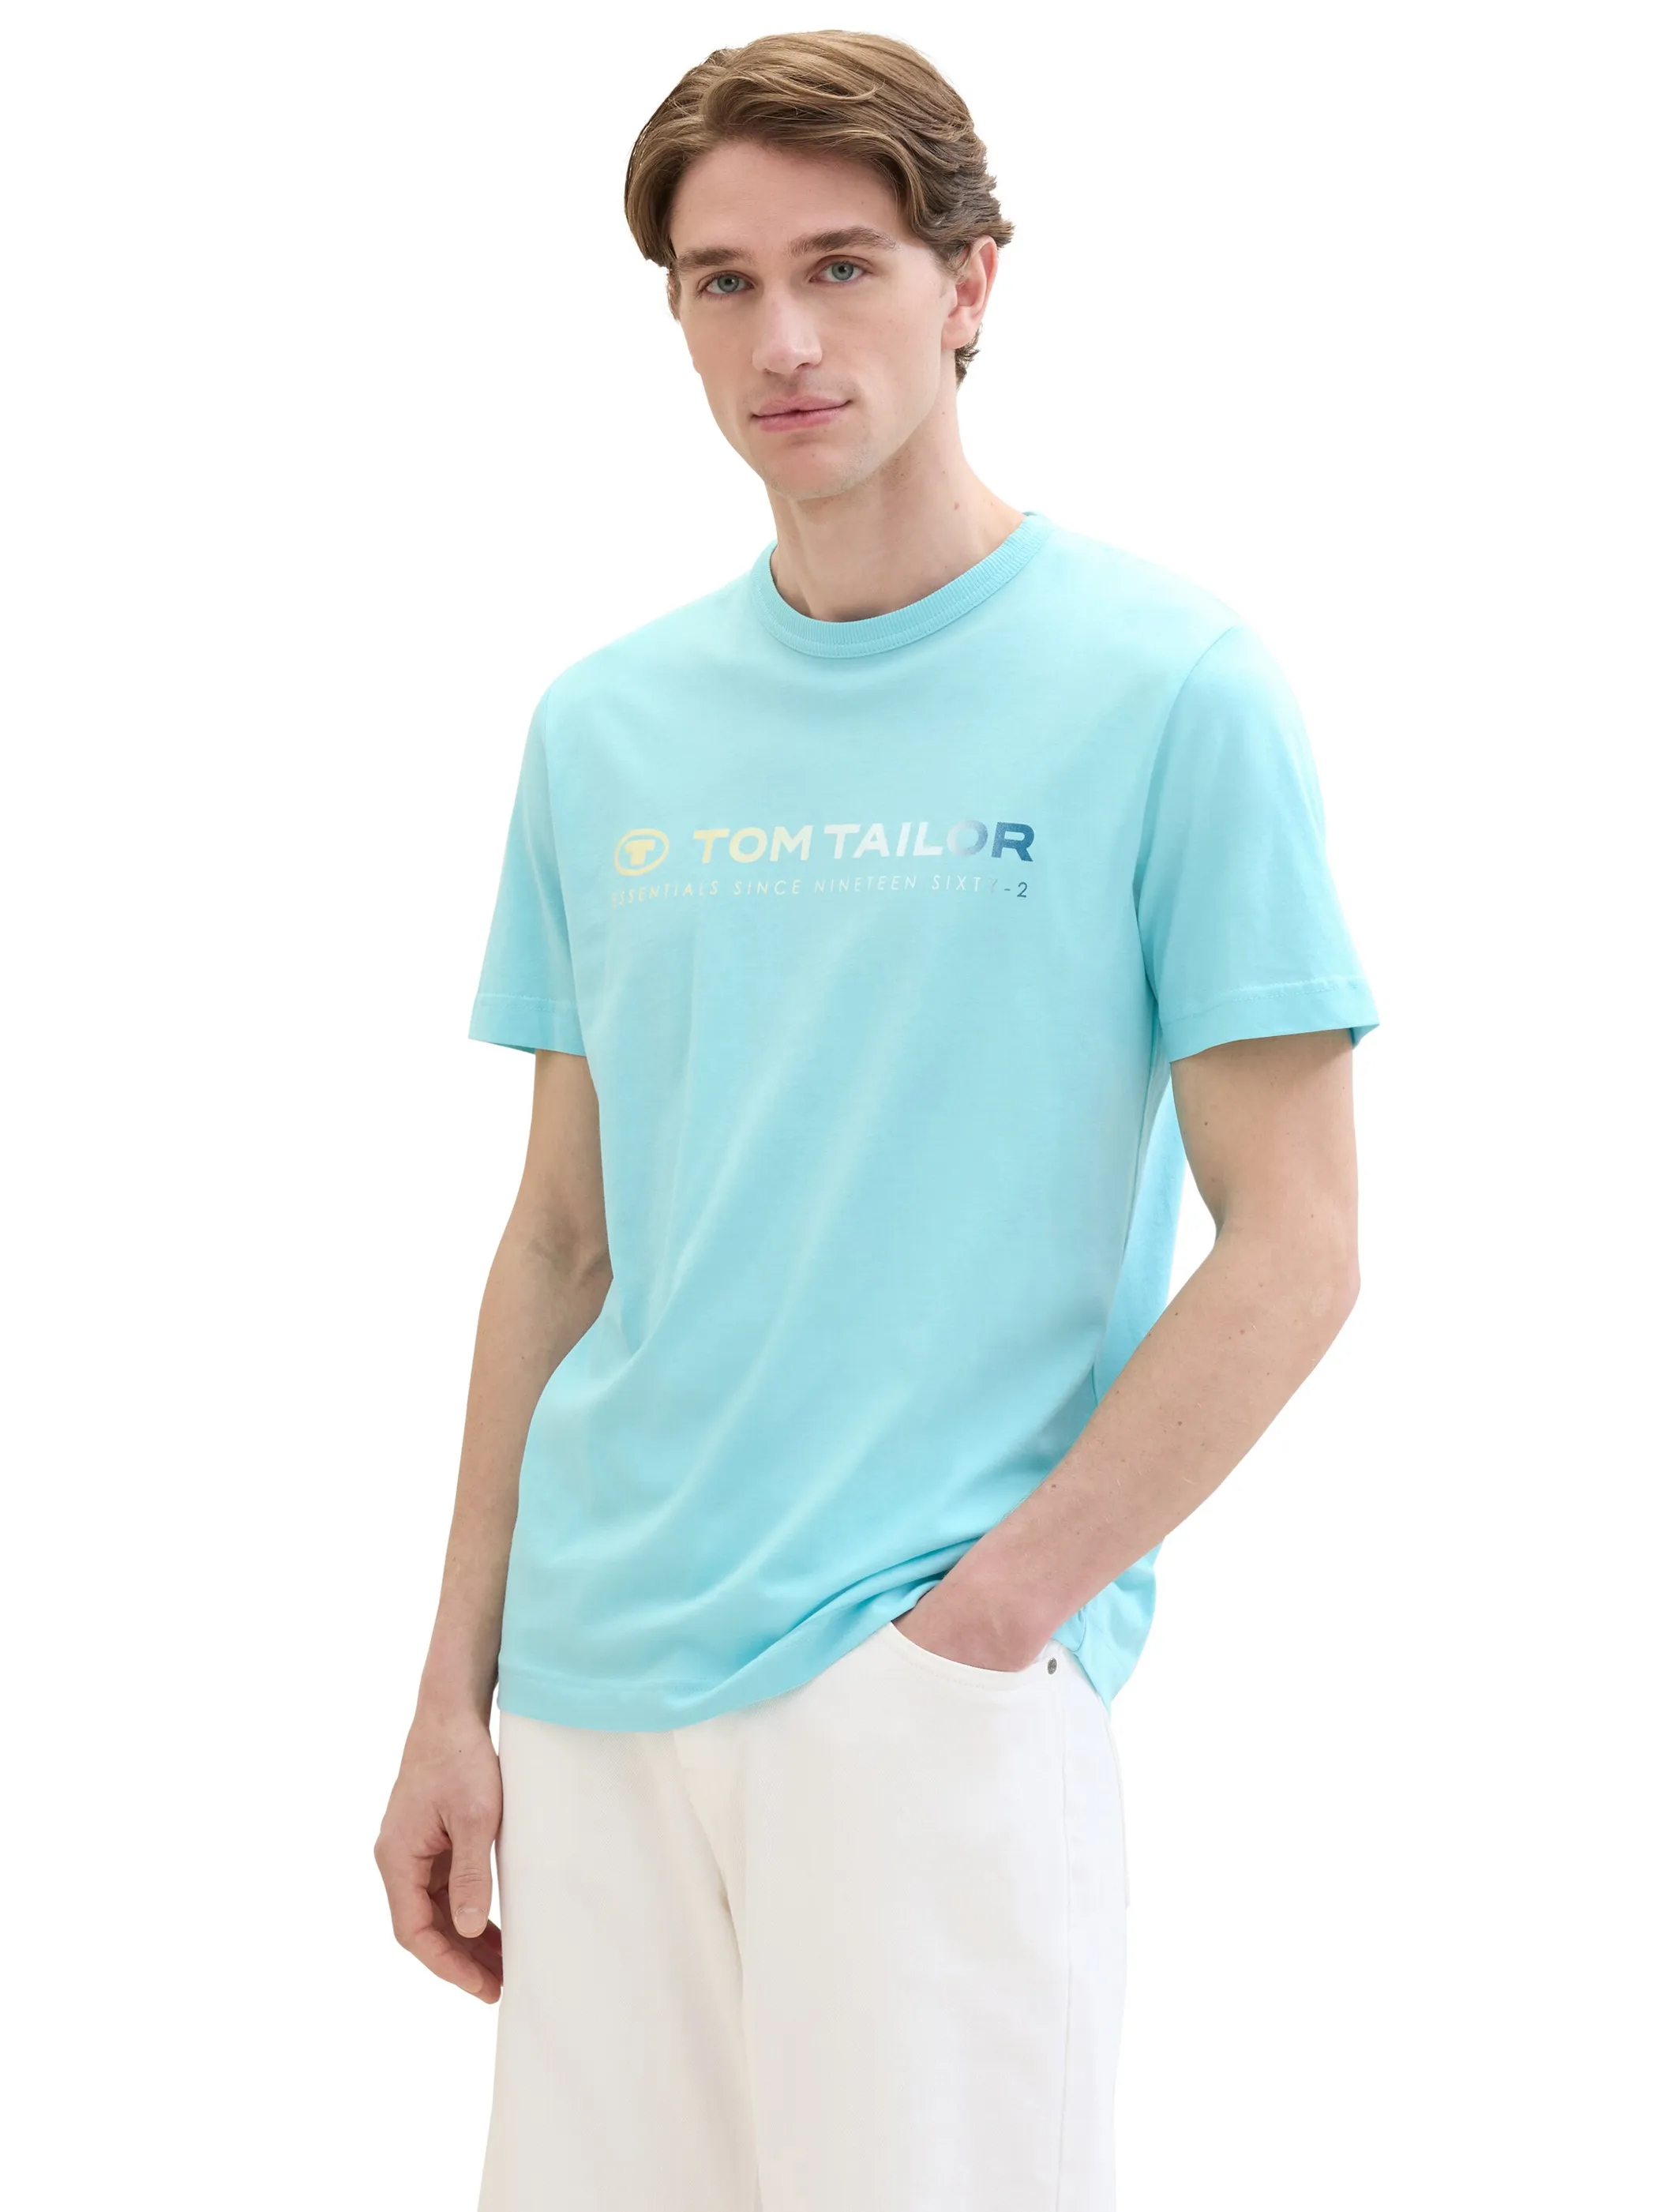 Tom Tailor 1041855 printed t-shirt Türkis 895629 34921 3